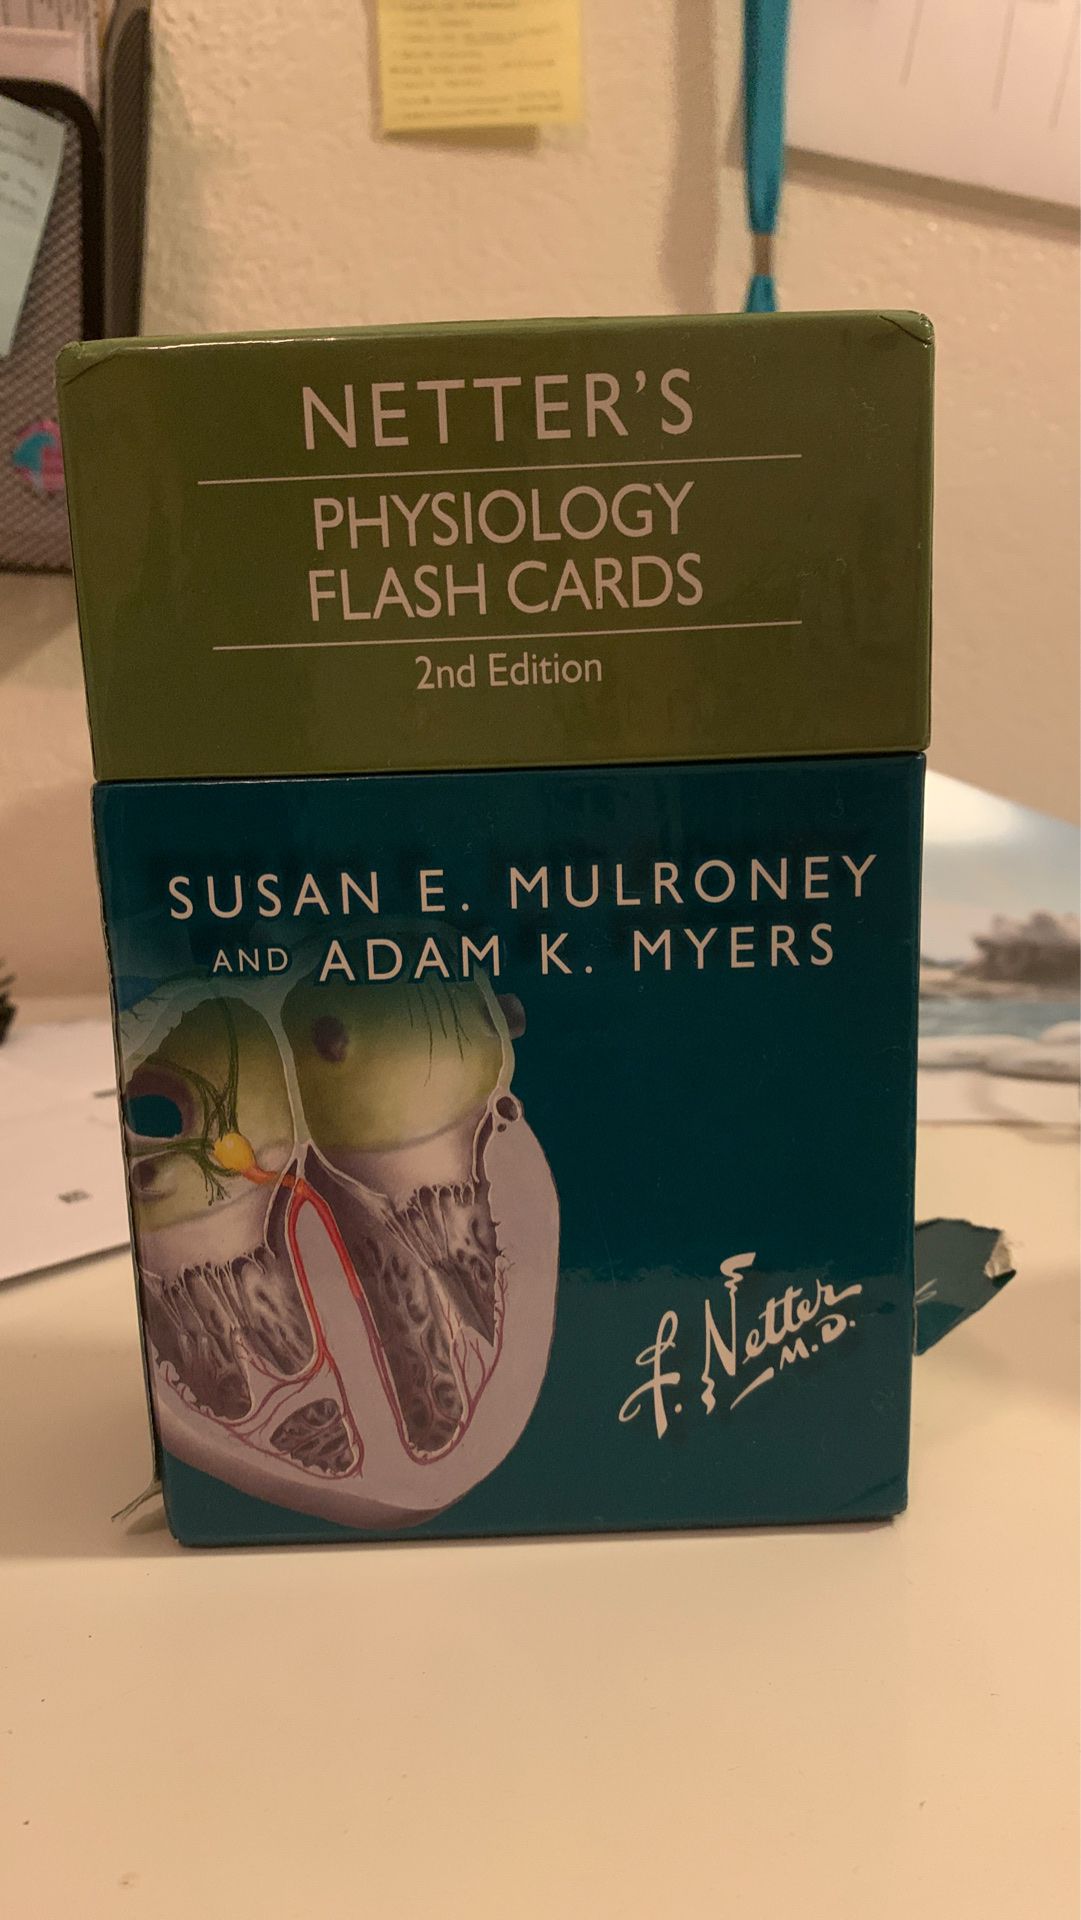 Physiology flash cards